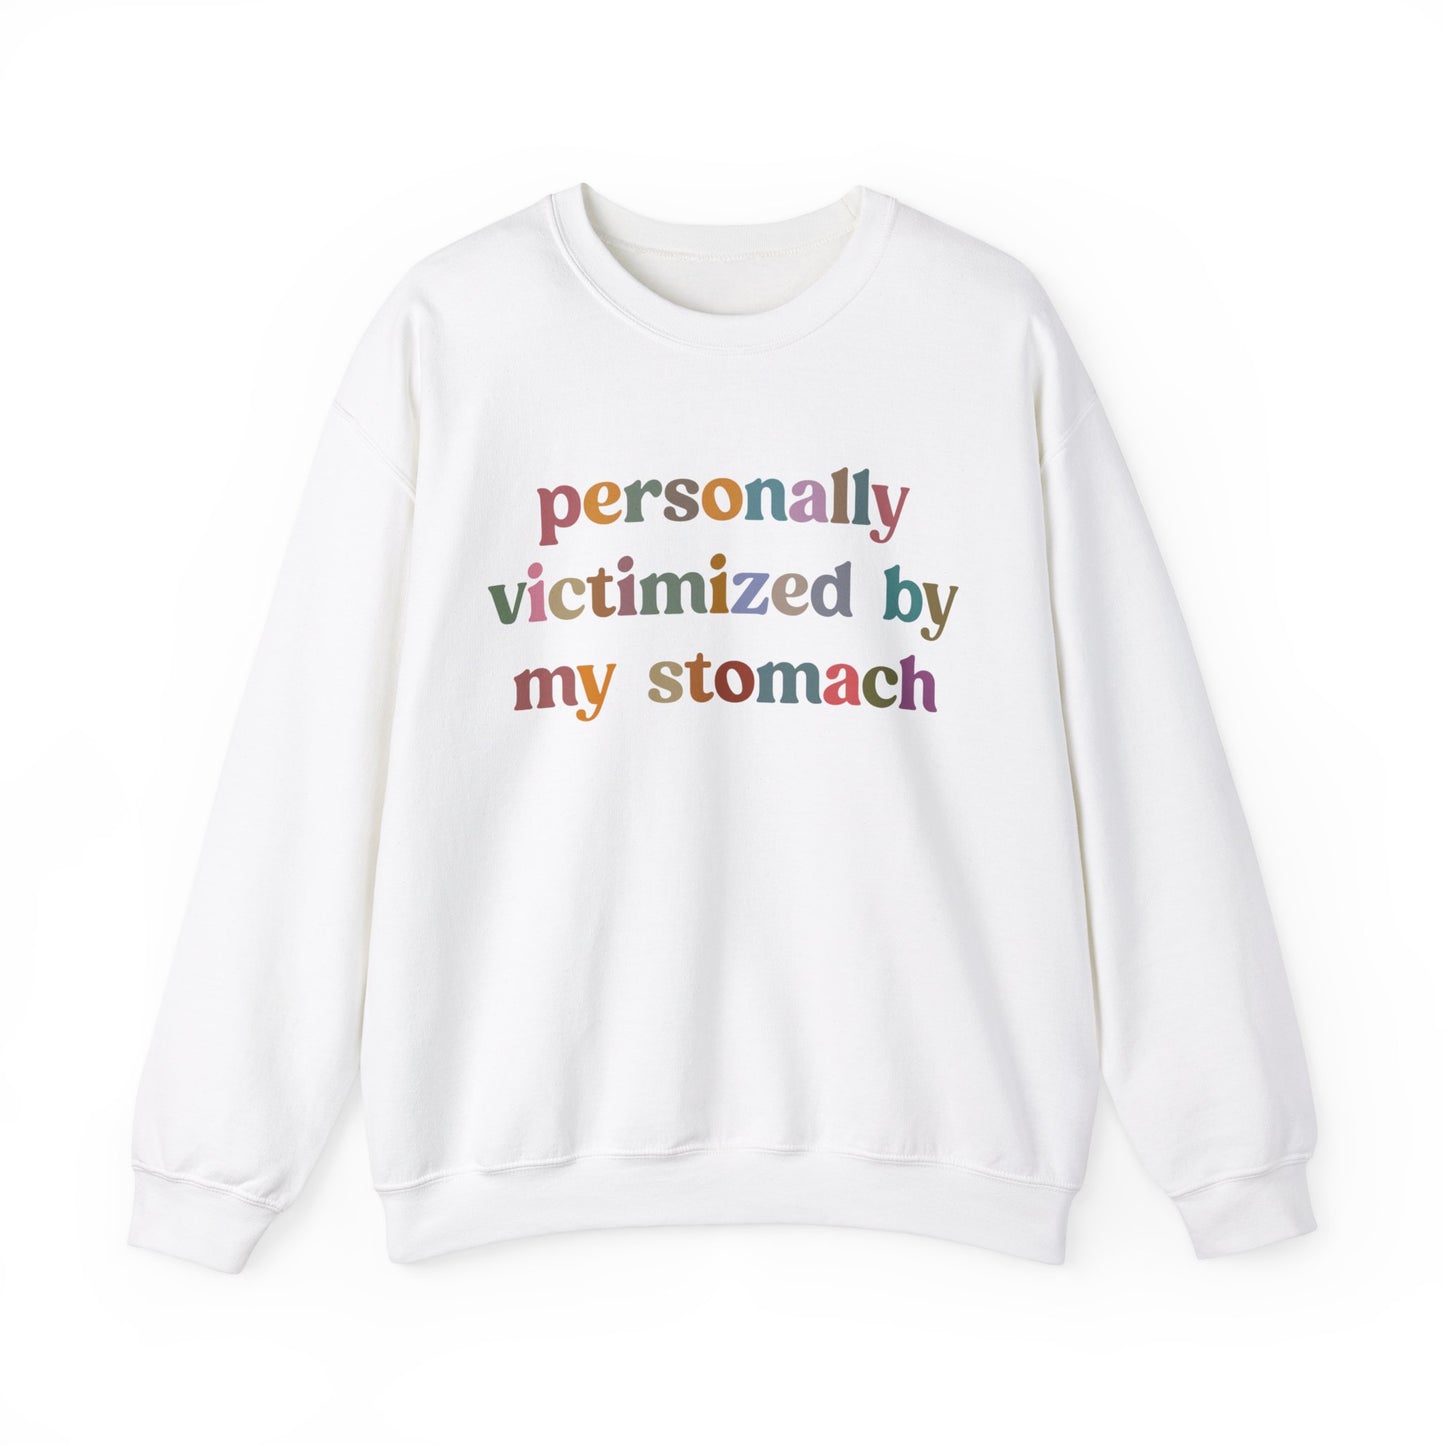 Personally Victimized By My Stomach Sweatshirt, Funny Shirt for Women, Funny Tummy Hurts Sweatshirt, Chronic Illness Sweatshirt, S1100